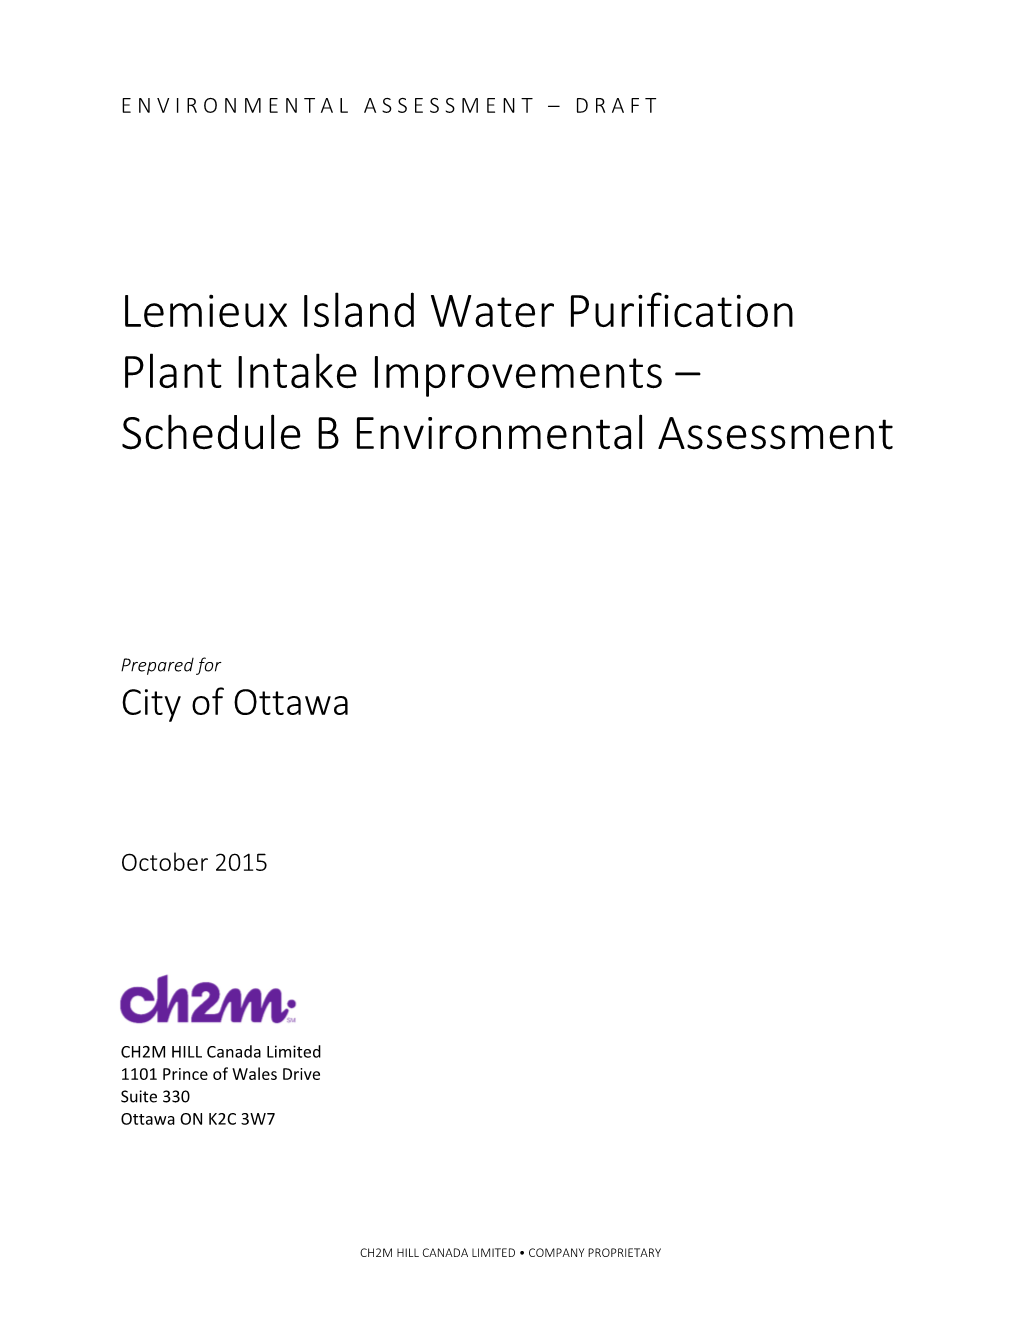 Lemieux Island Water Purification Plant Intake Improvements – Schedule B Environmental Assessment